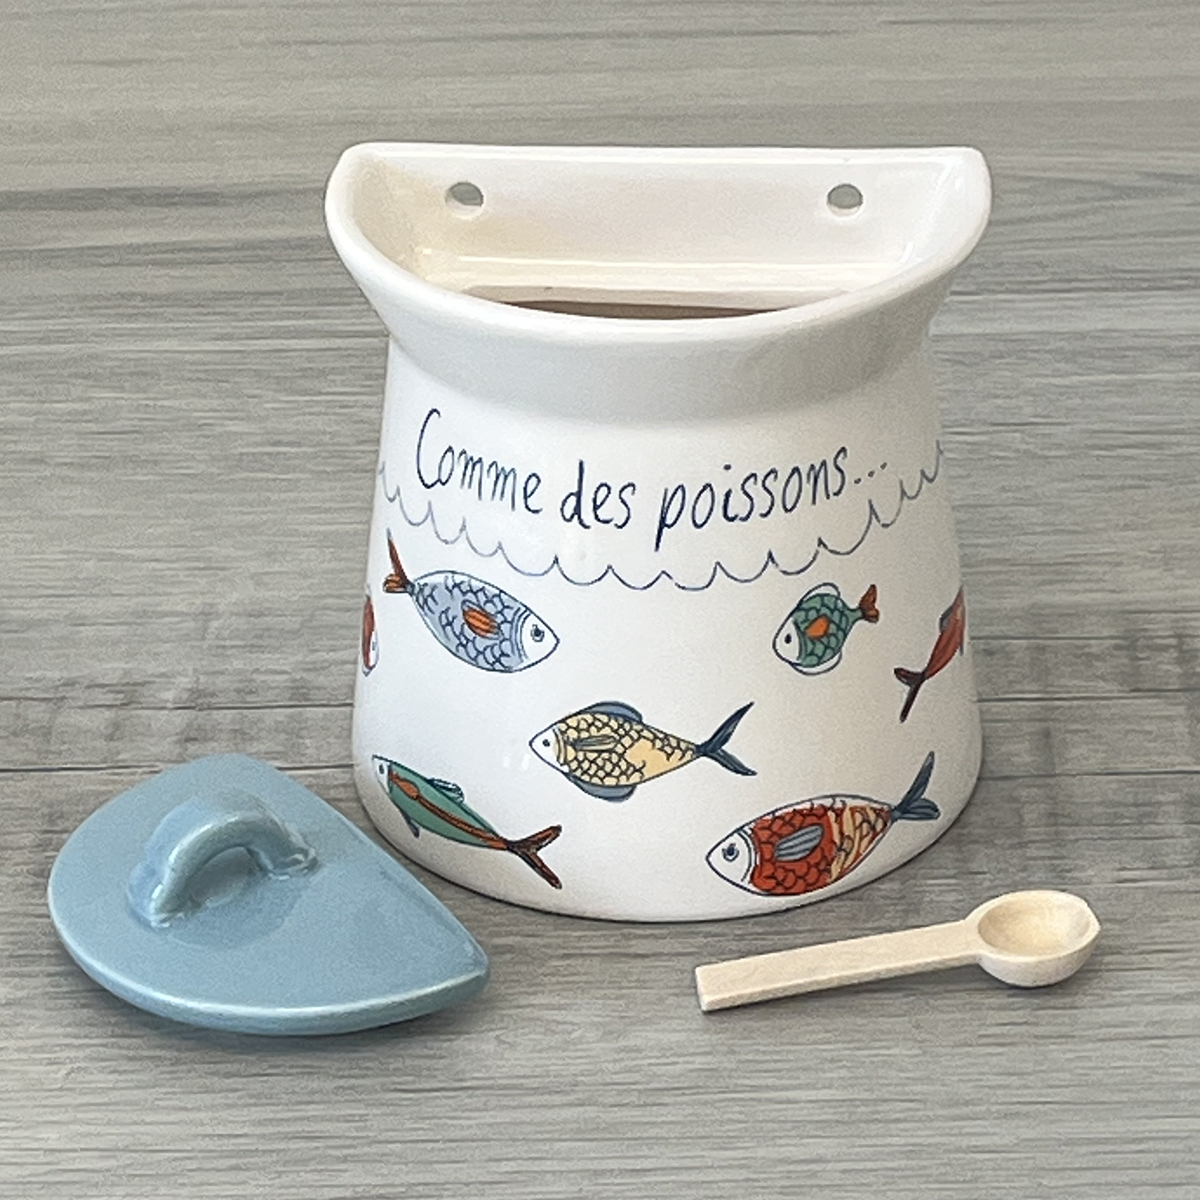 Ceramic salt pot with spoon